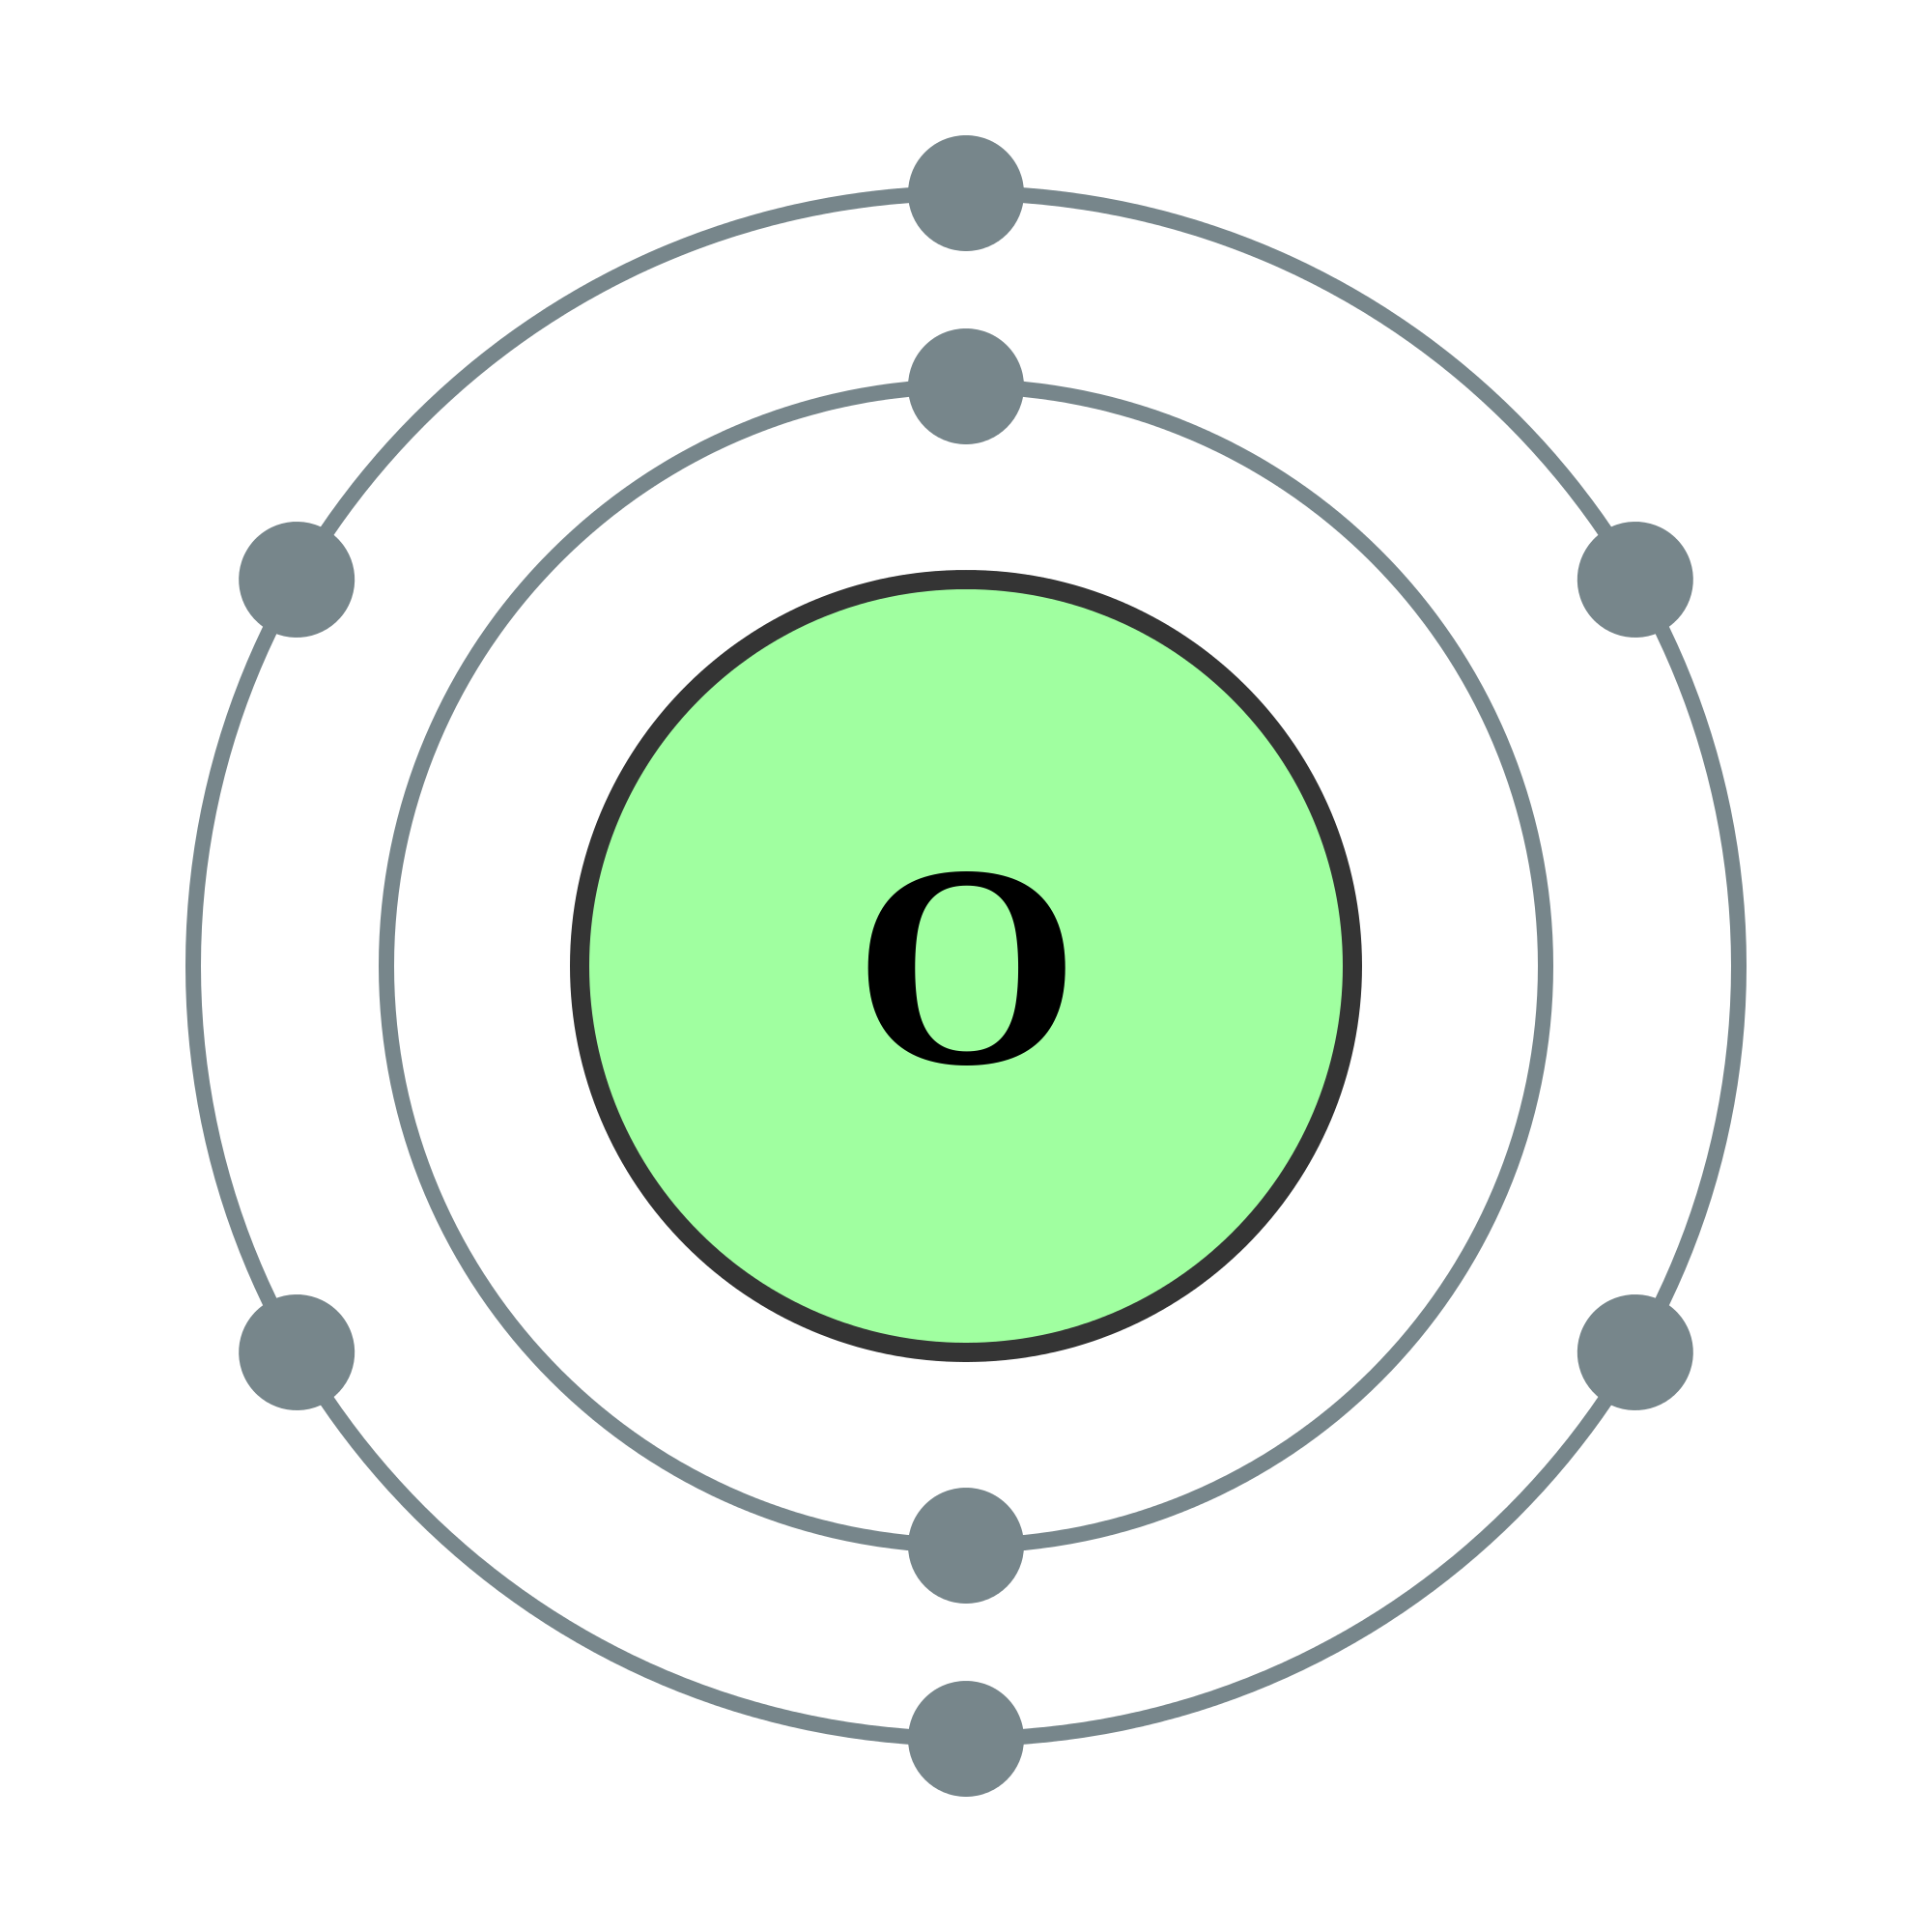 elemental oxygen charge